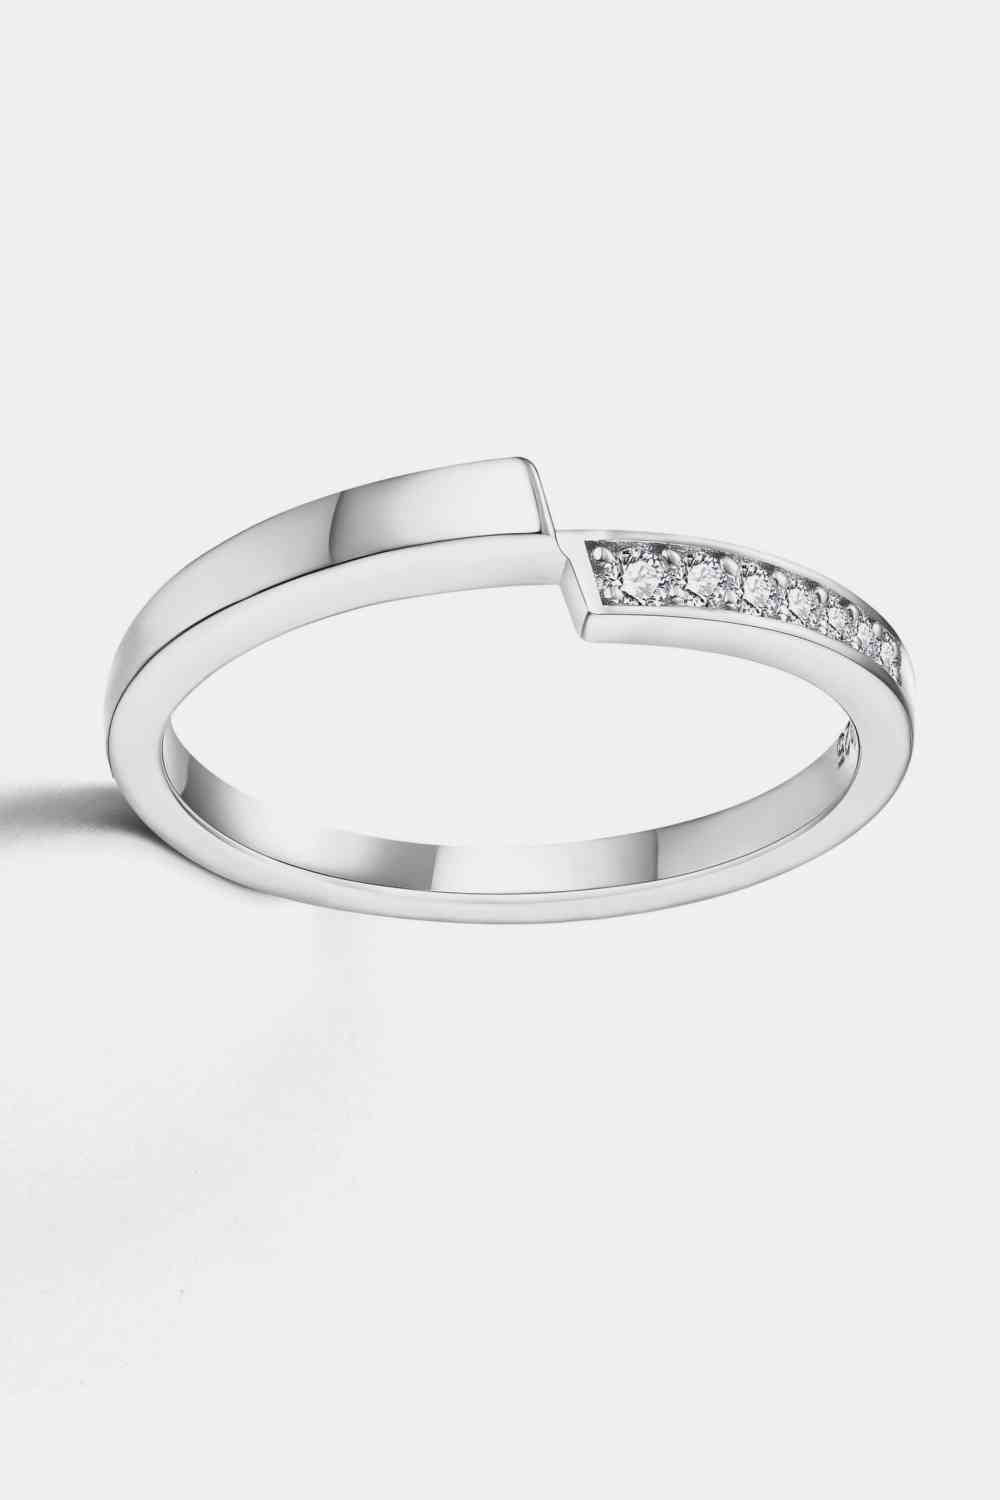 PREORDER- Moissanite 925 Sterling Silver Ring